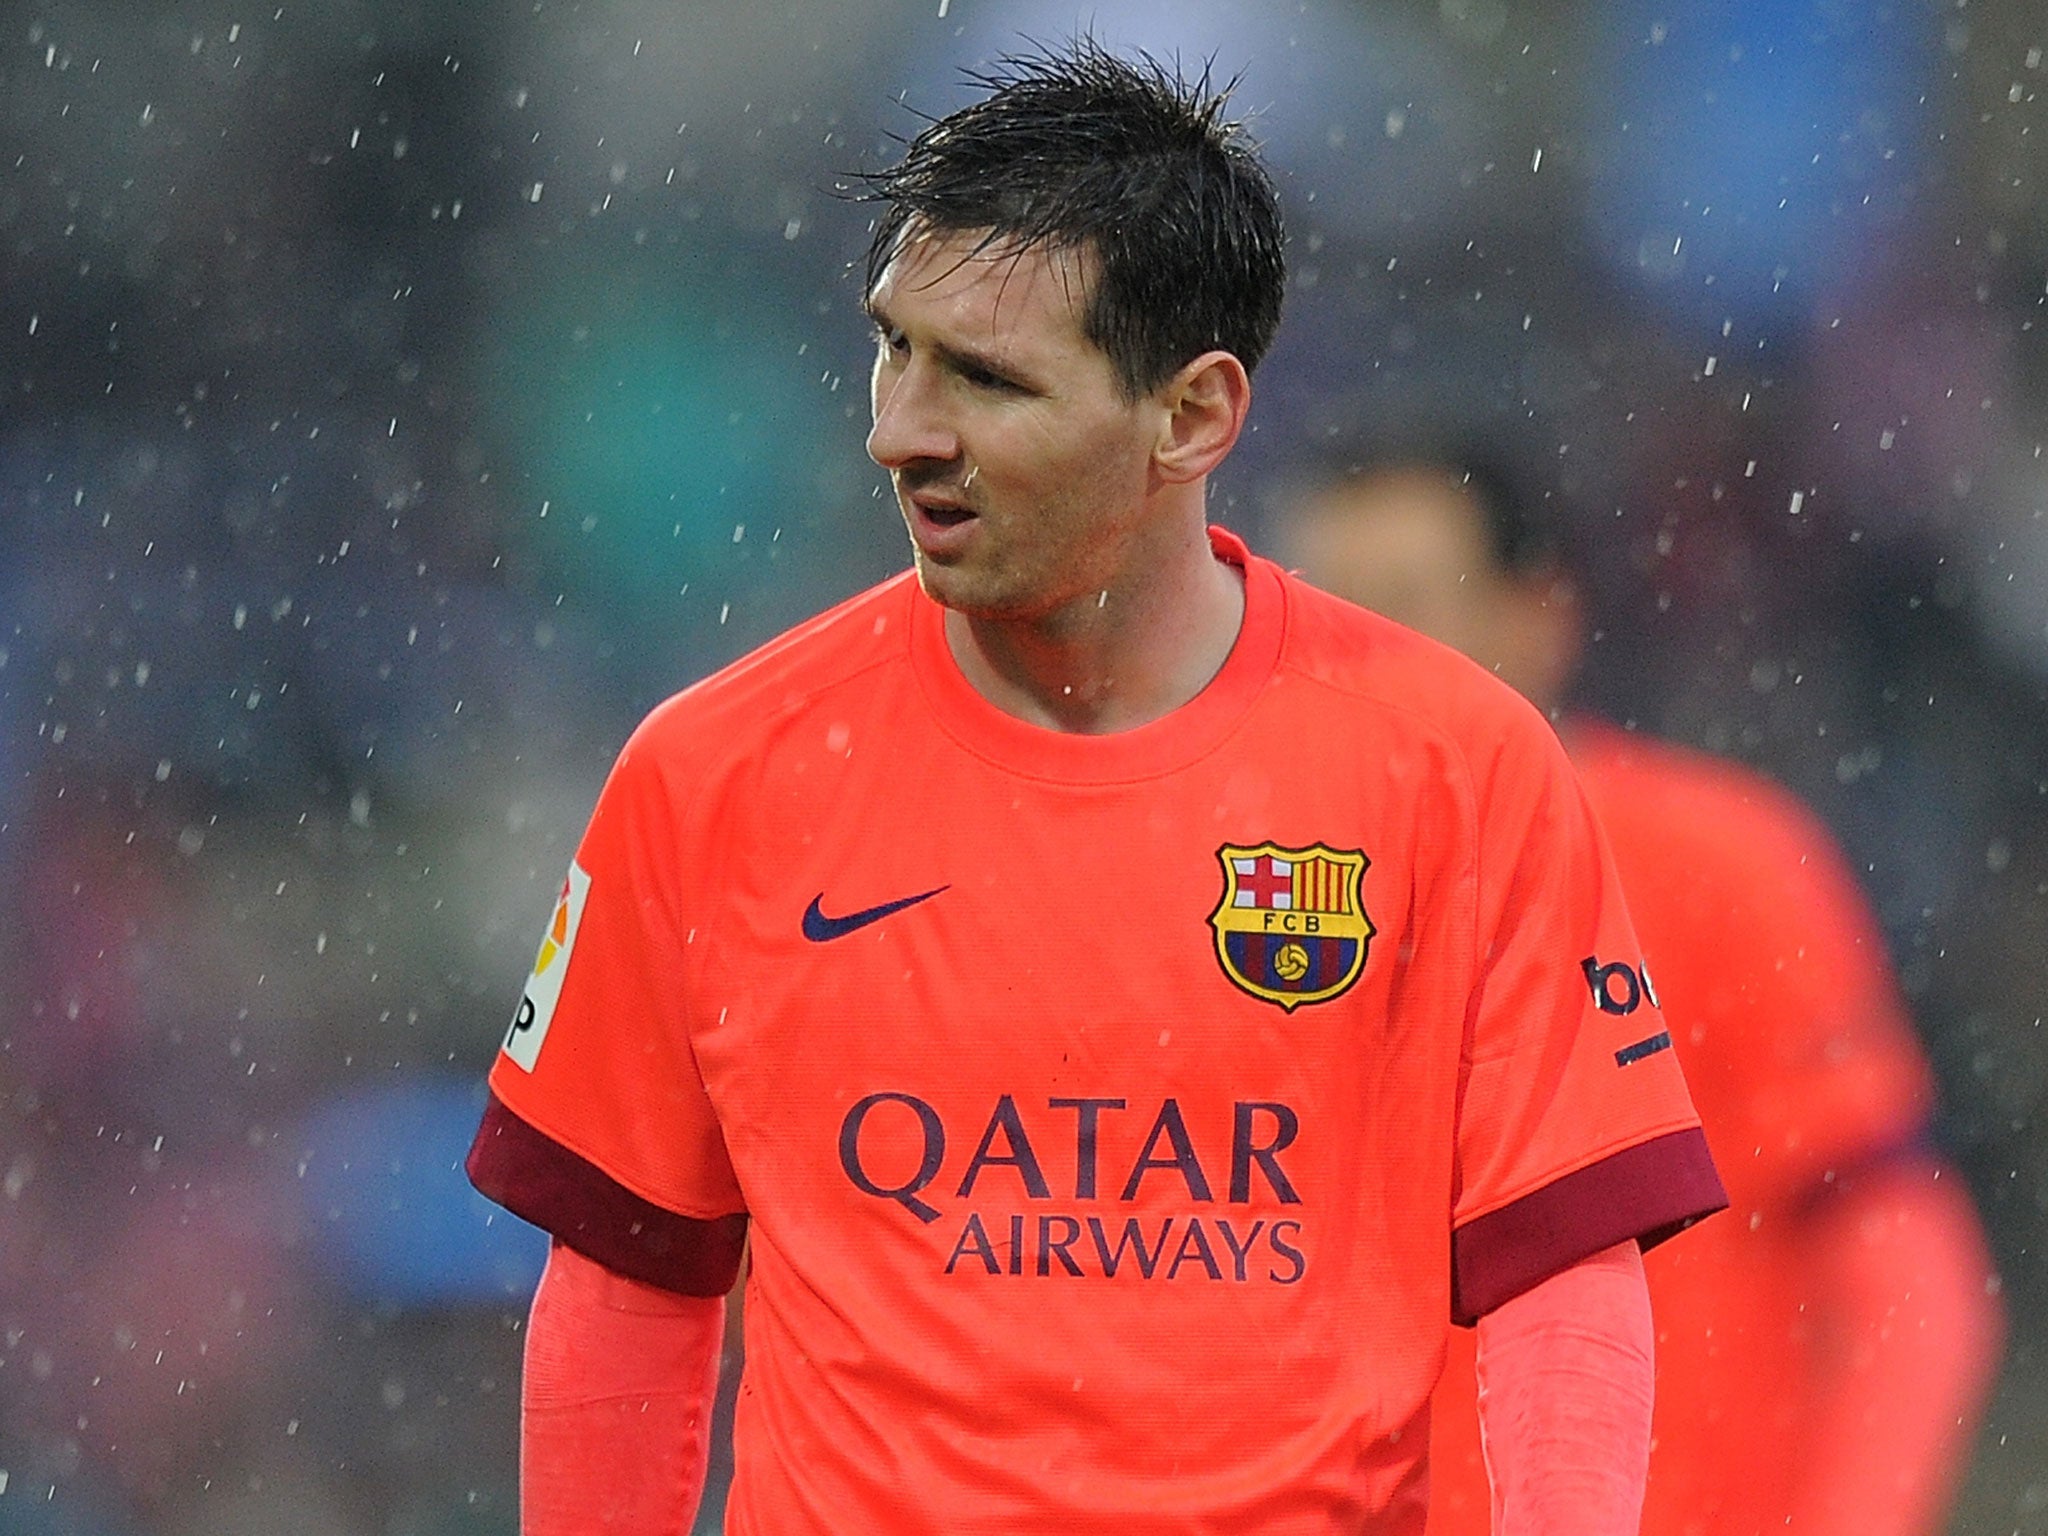 Lionel Messi has scored 57 goals so far in 2014